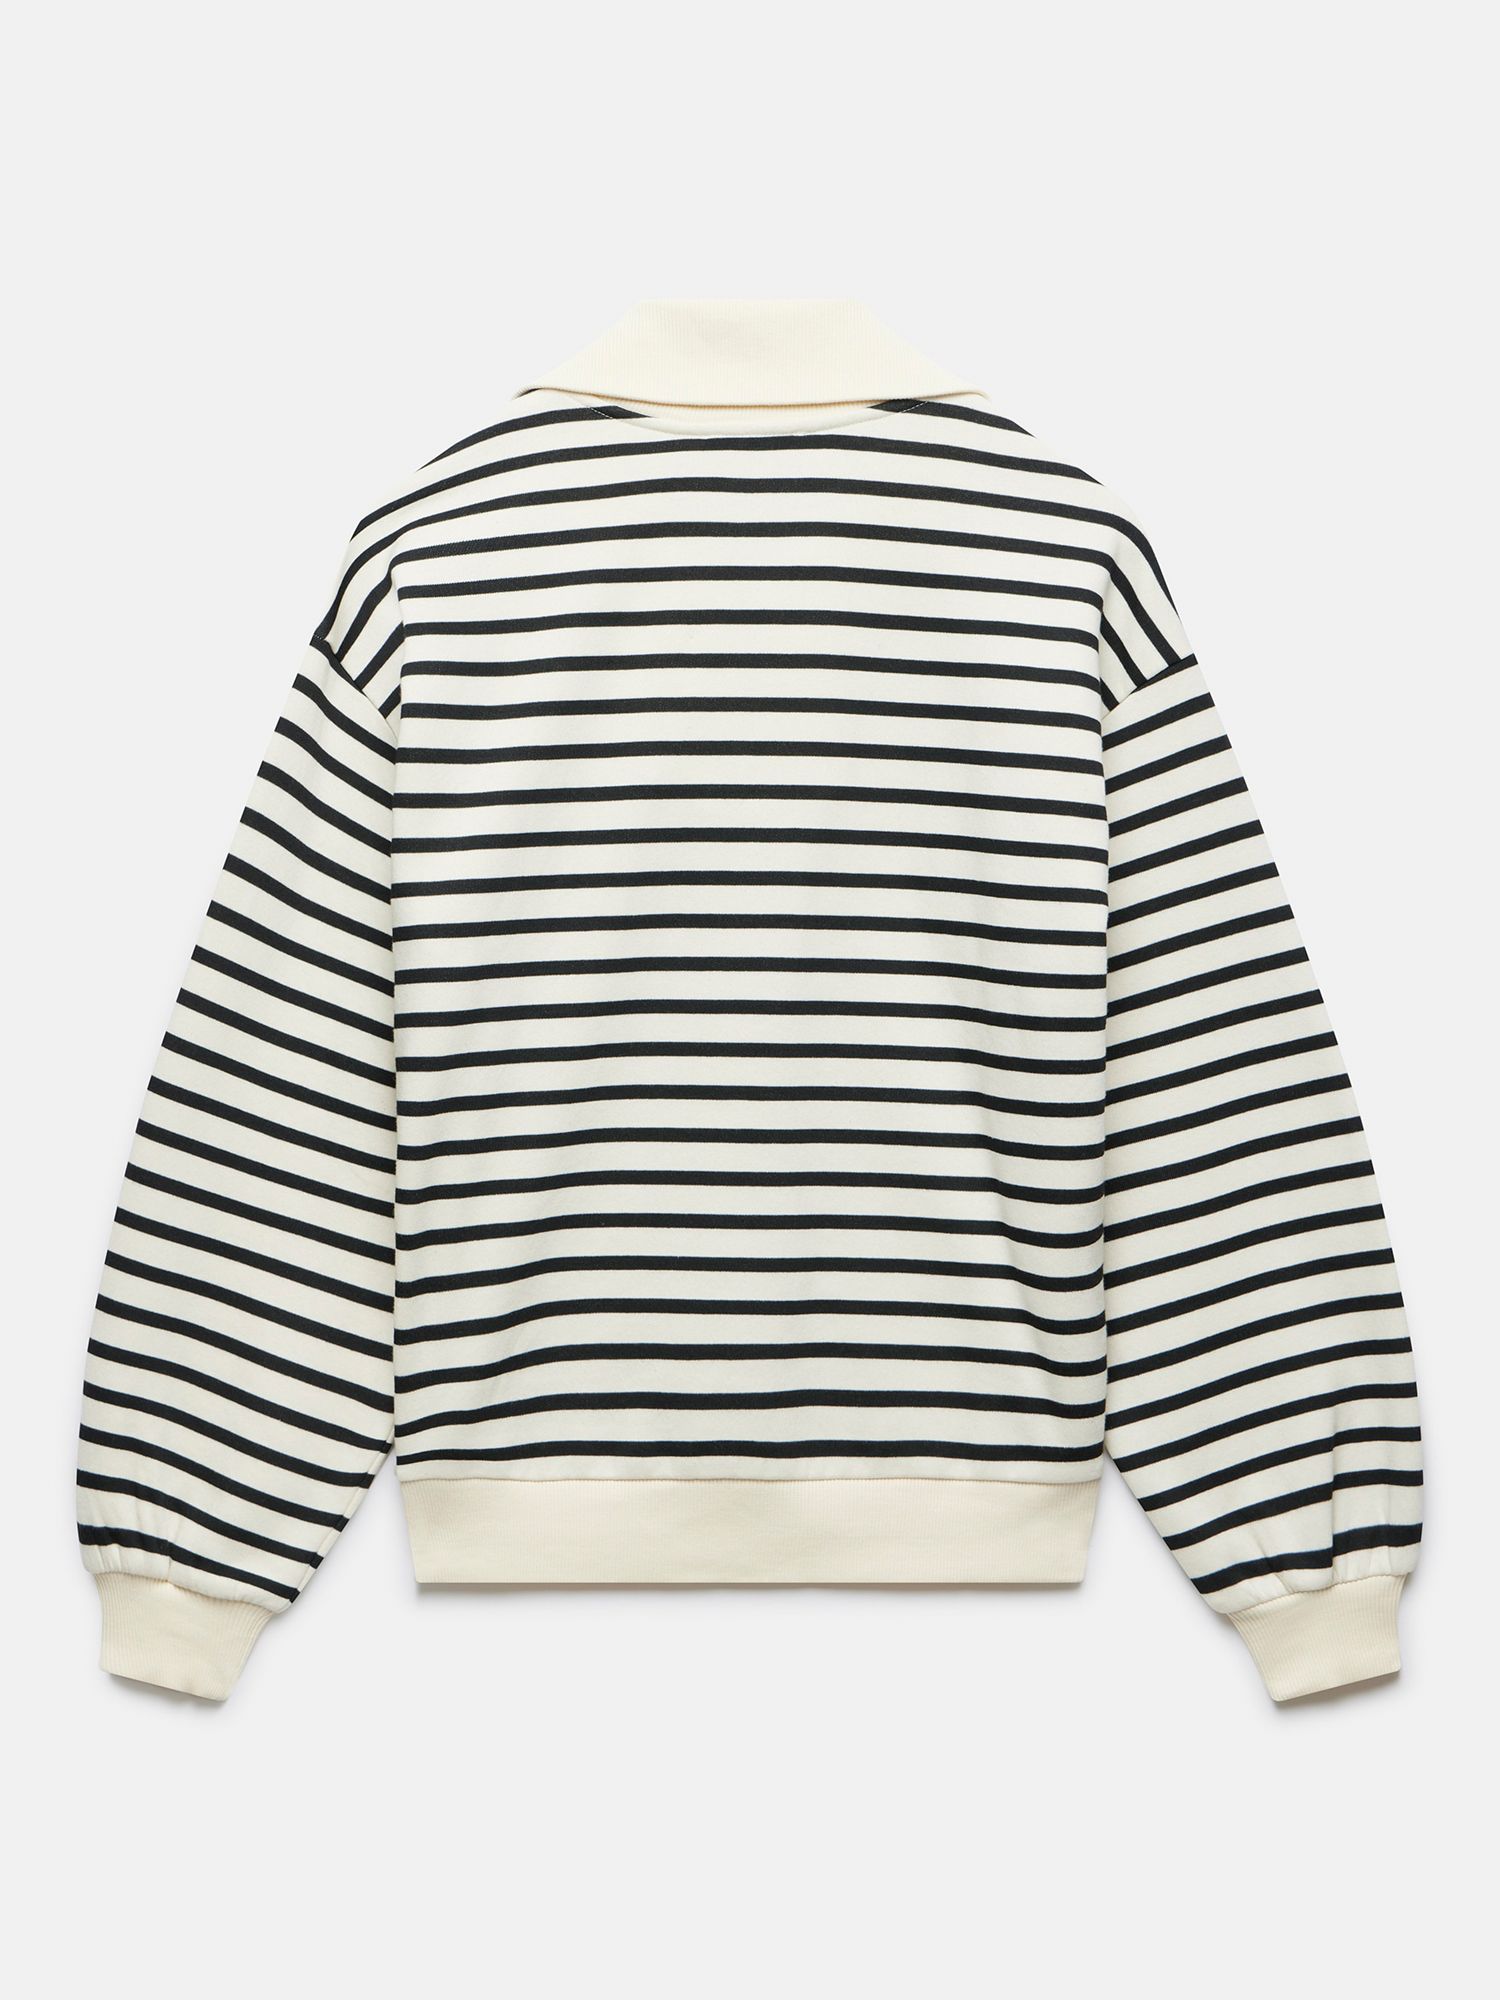 Mint Velvet Striped Cotton Half Zip Sweatshirt, Cream/Black, L